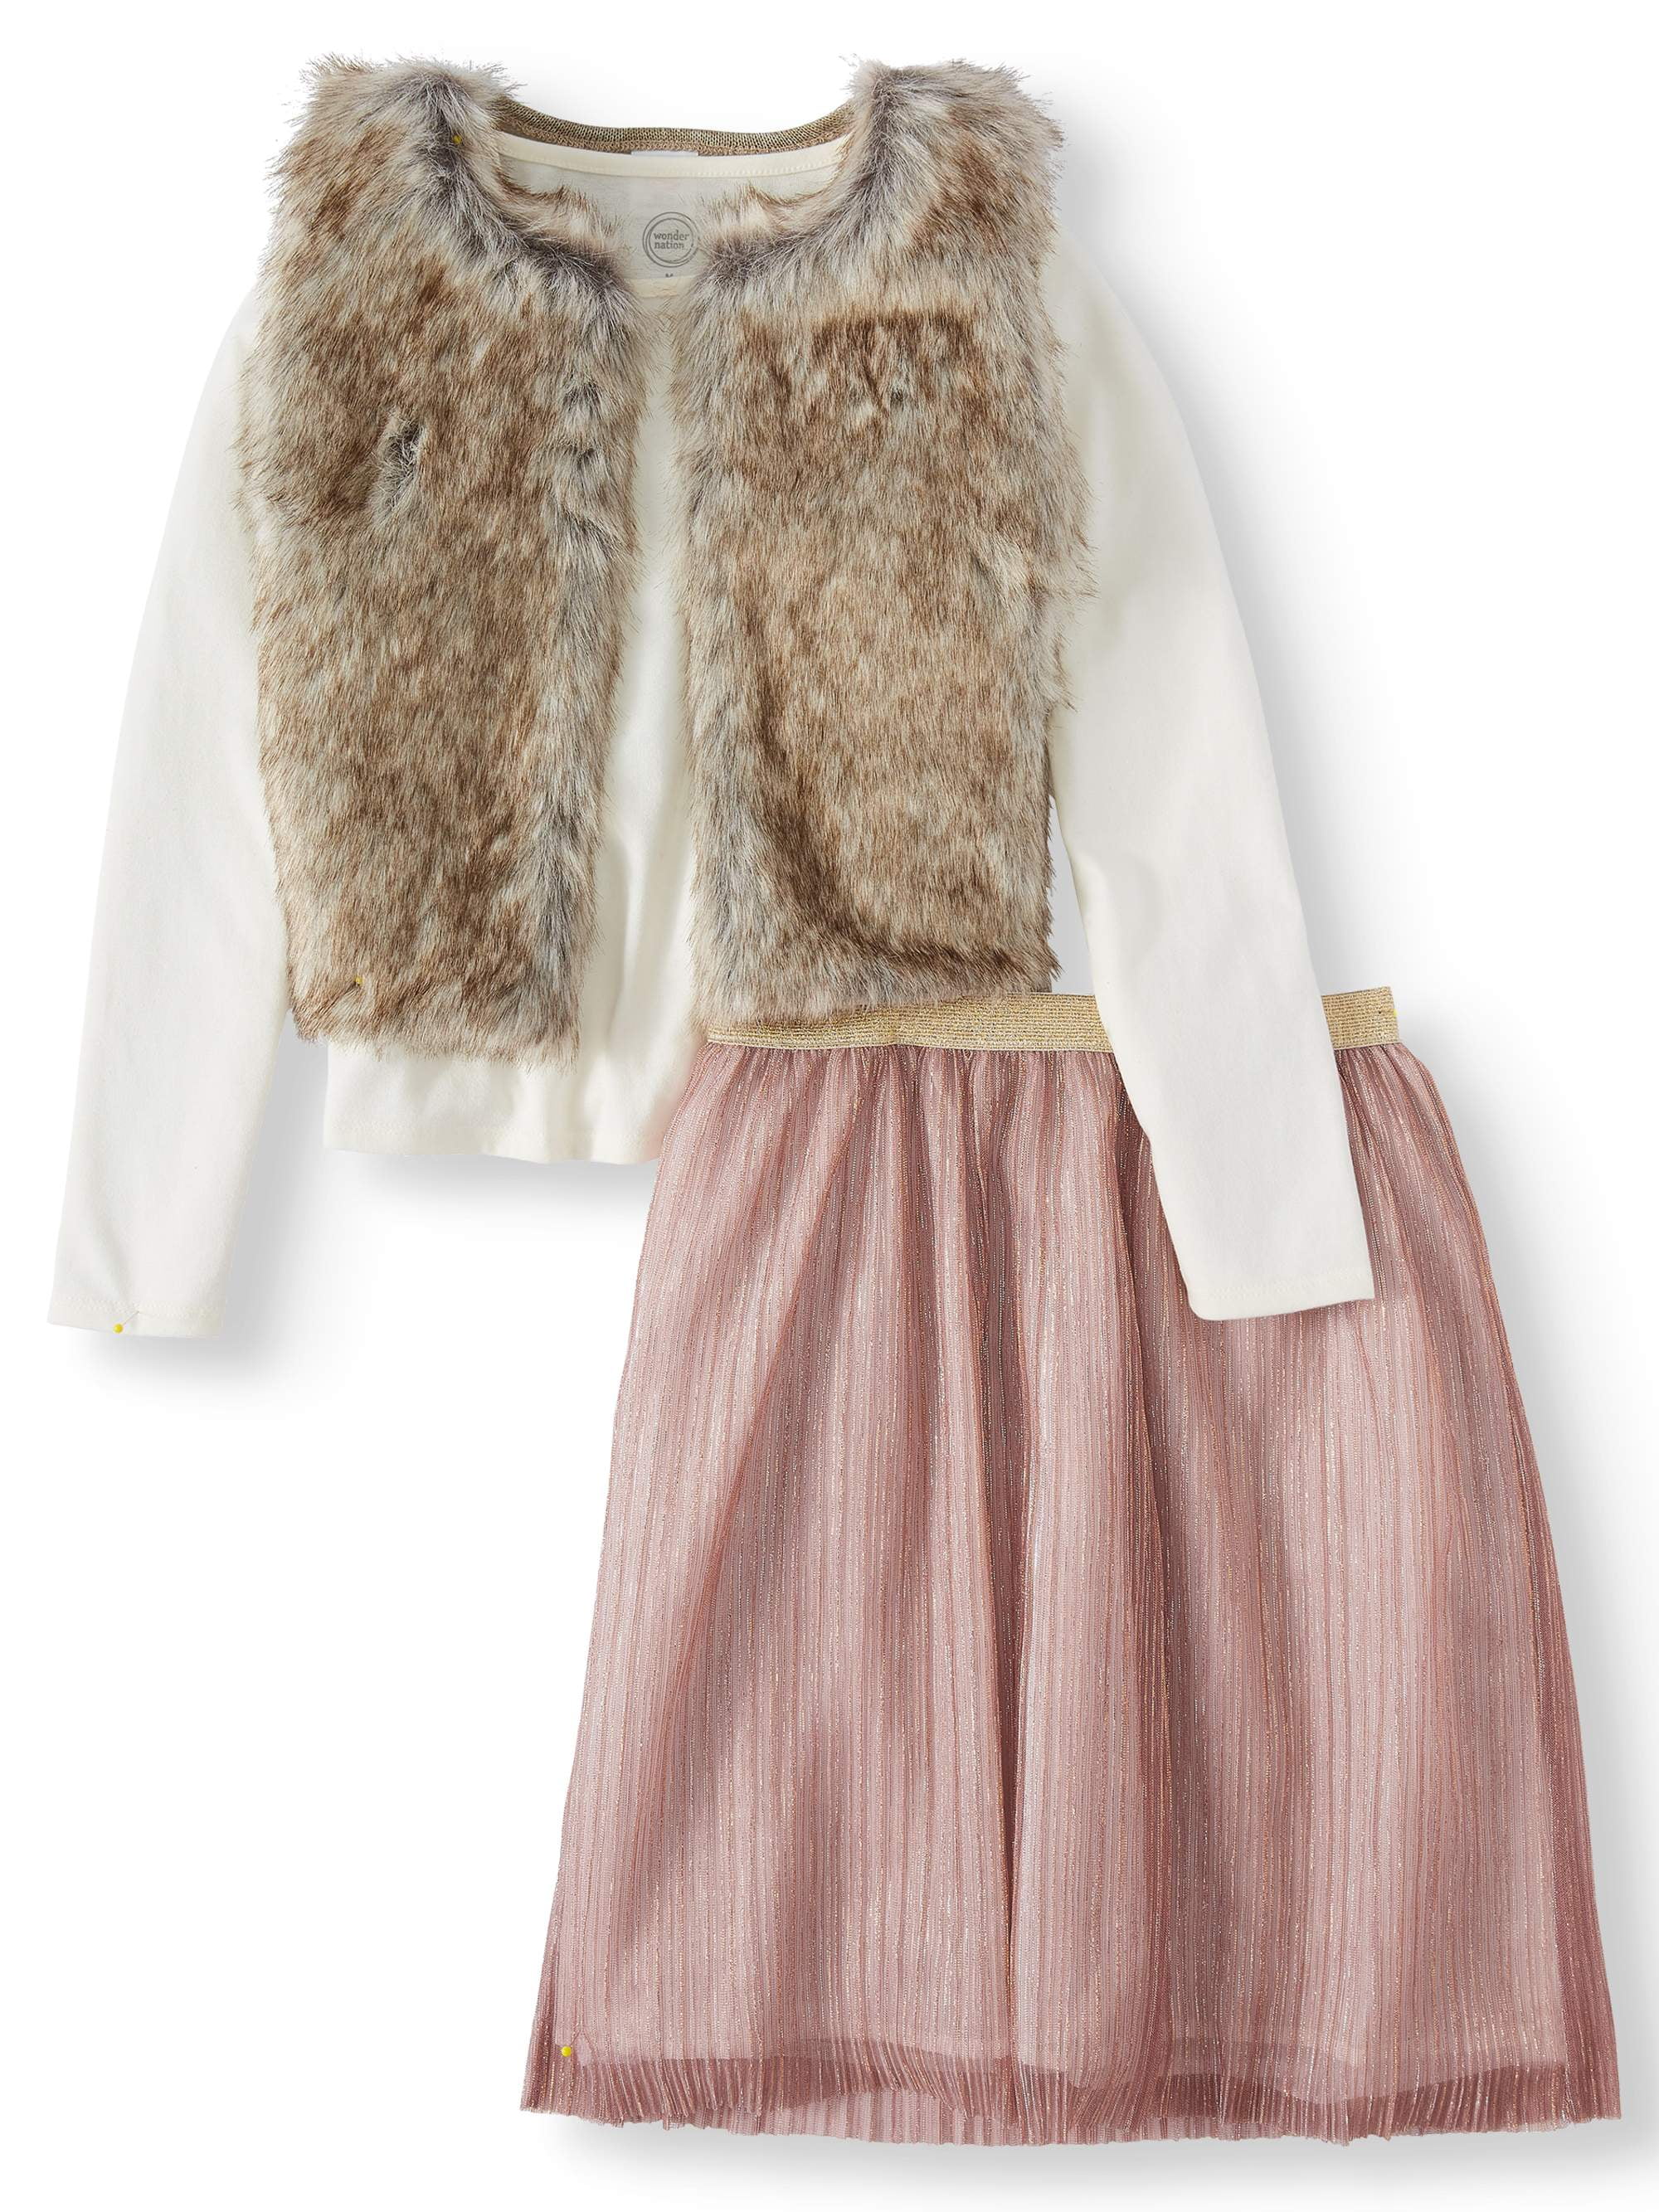 Wonder Nation Girls Fur Vest, Long Top and Glitter Tulle Outfit Set, 3-Piece, Sizes 4-18 & Plus - Walmart.com